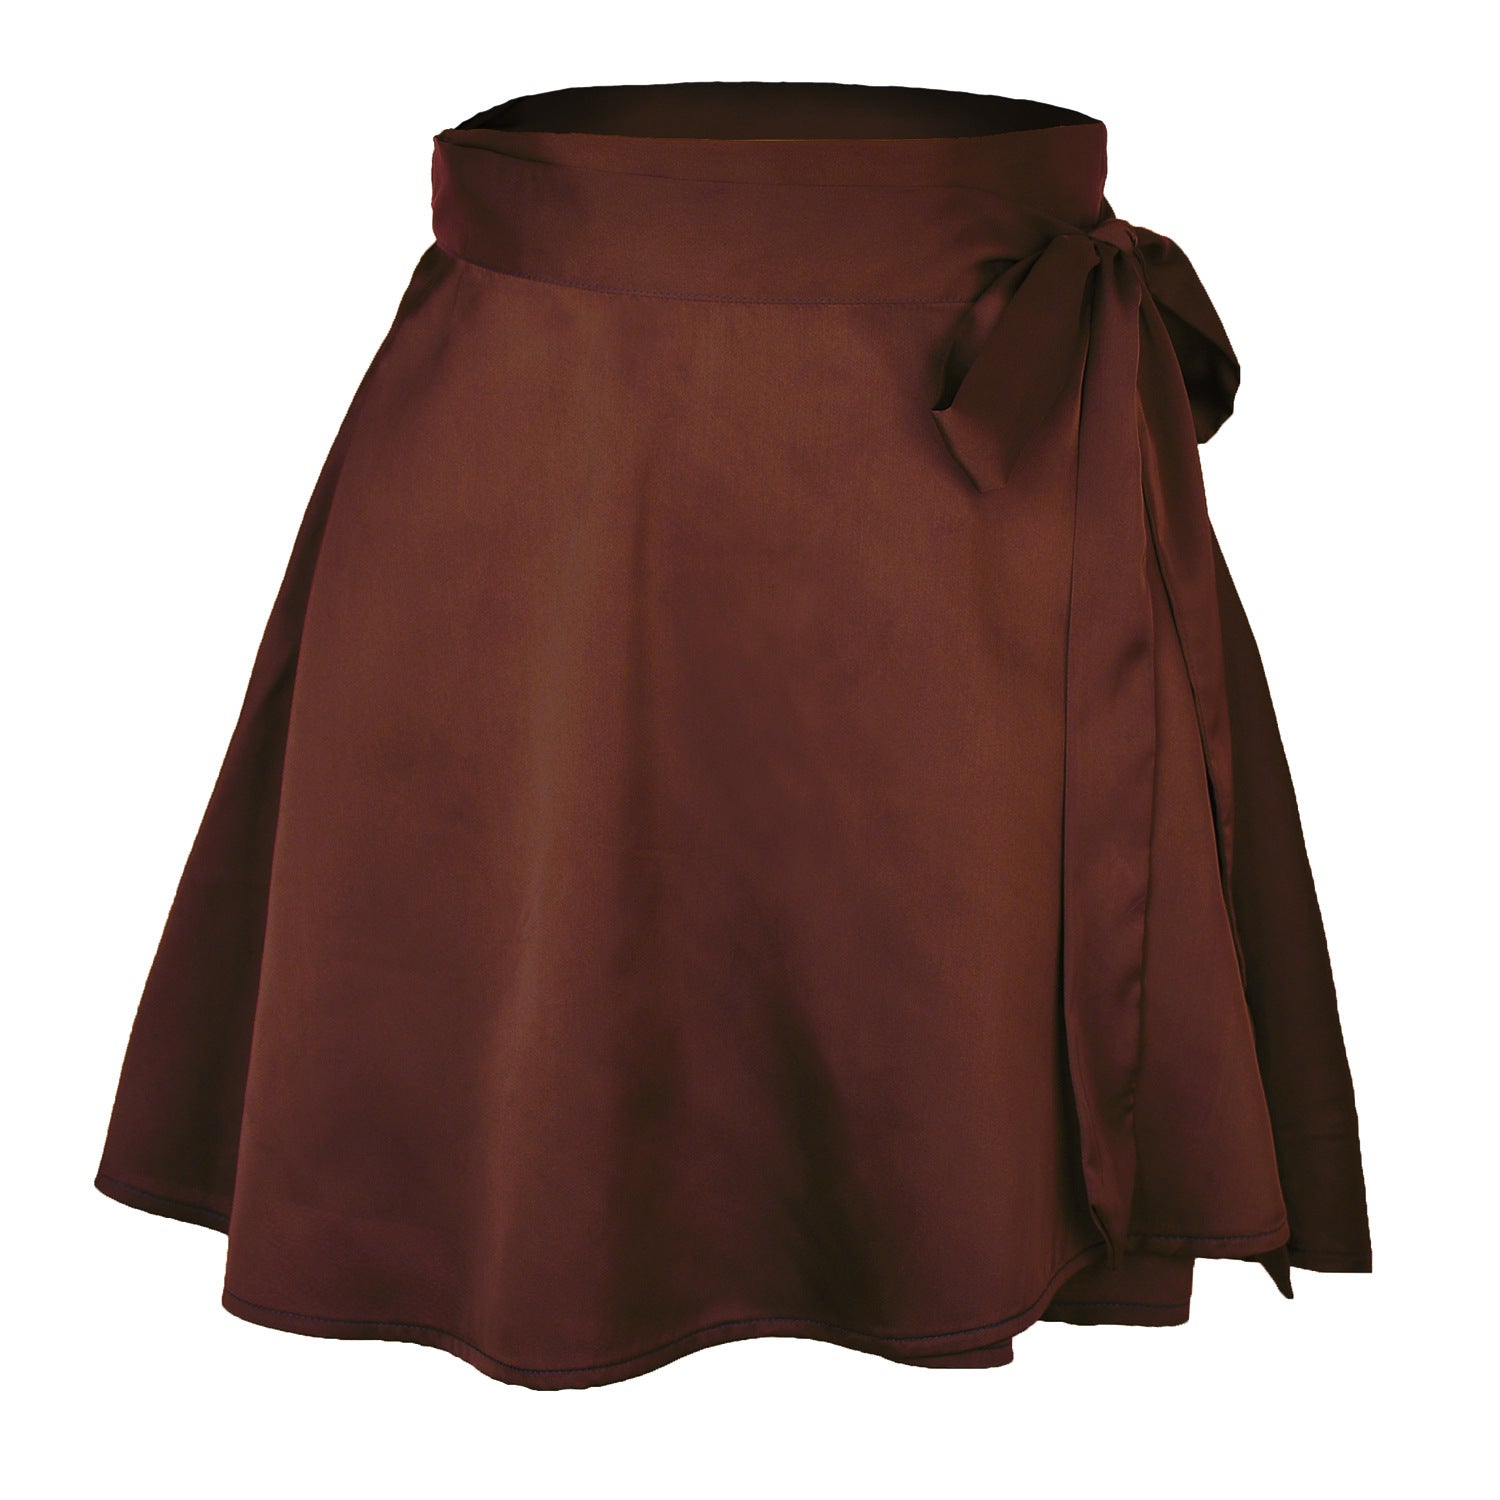 Summer Solid High Sweet Waist Fashion Lace-up Chiffon Satin Wrap Skirt